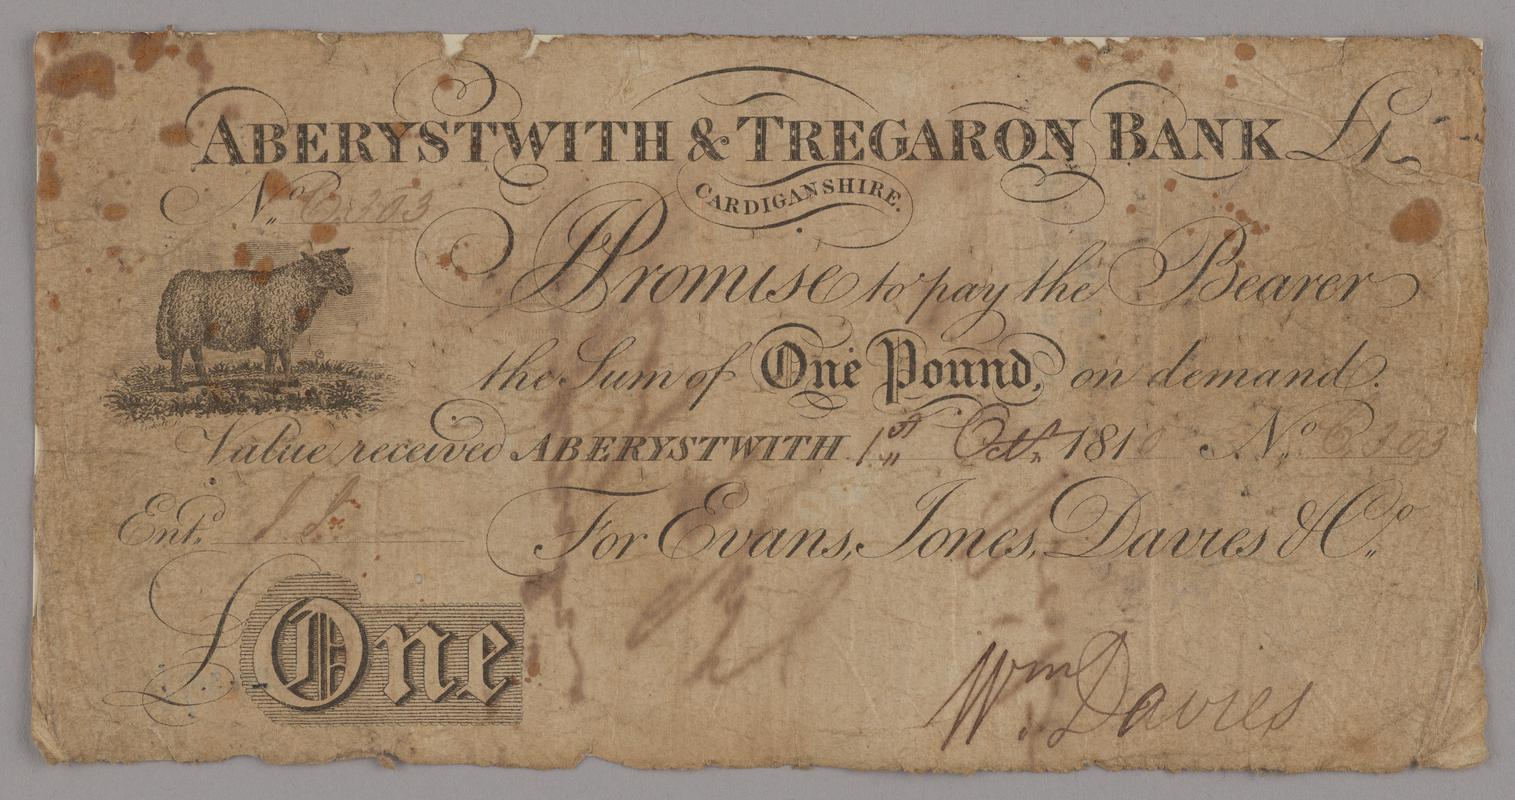 Aberystwith & Tregaron Bank one pound bank note, 1810